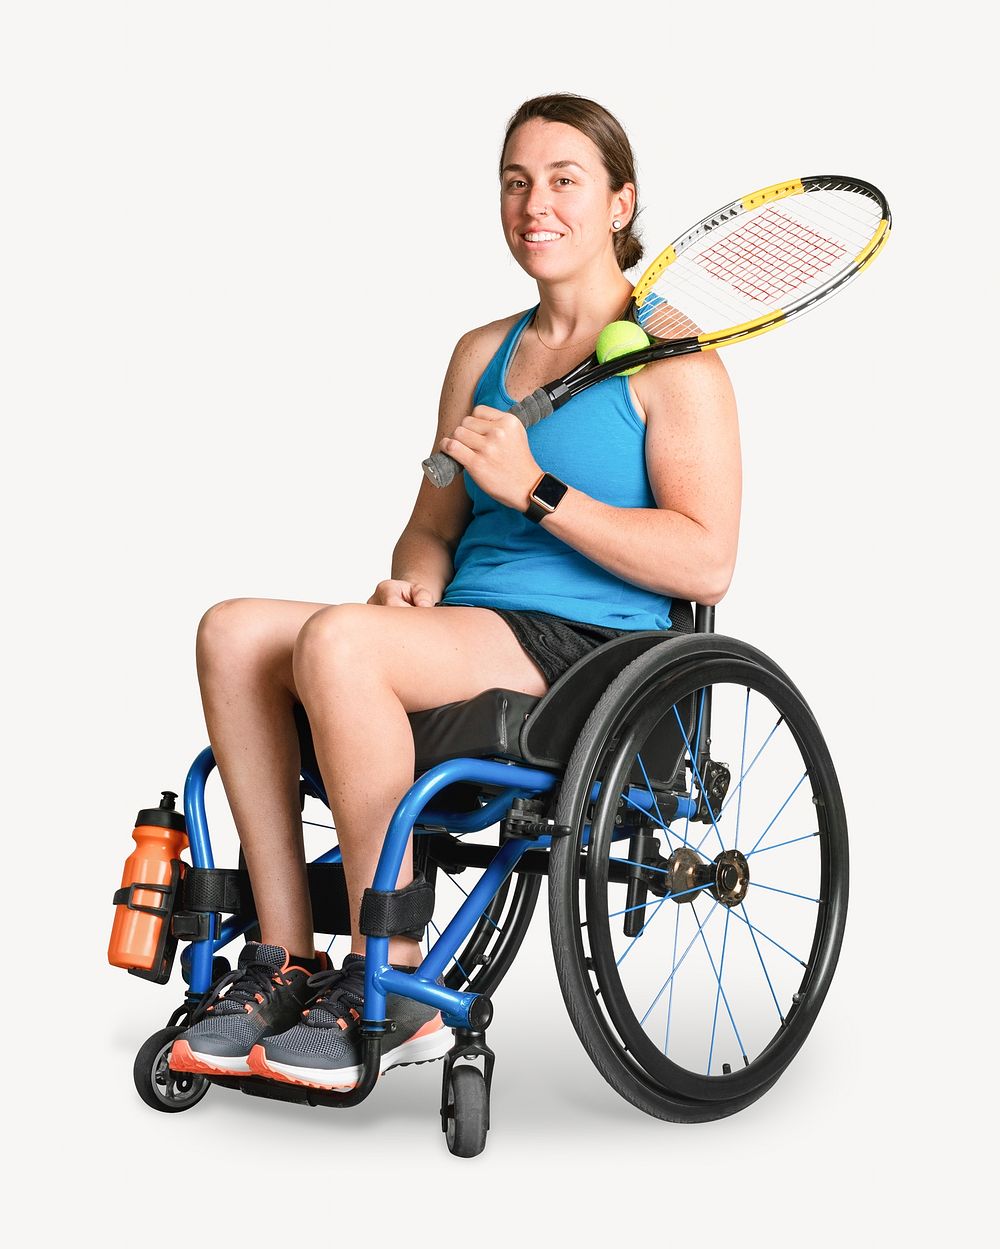 Female athlete in wheelchair holding tennis racket image element